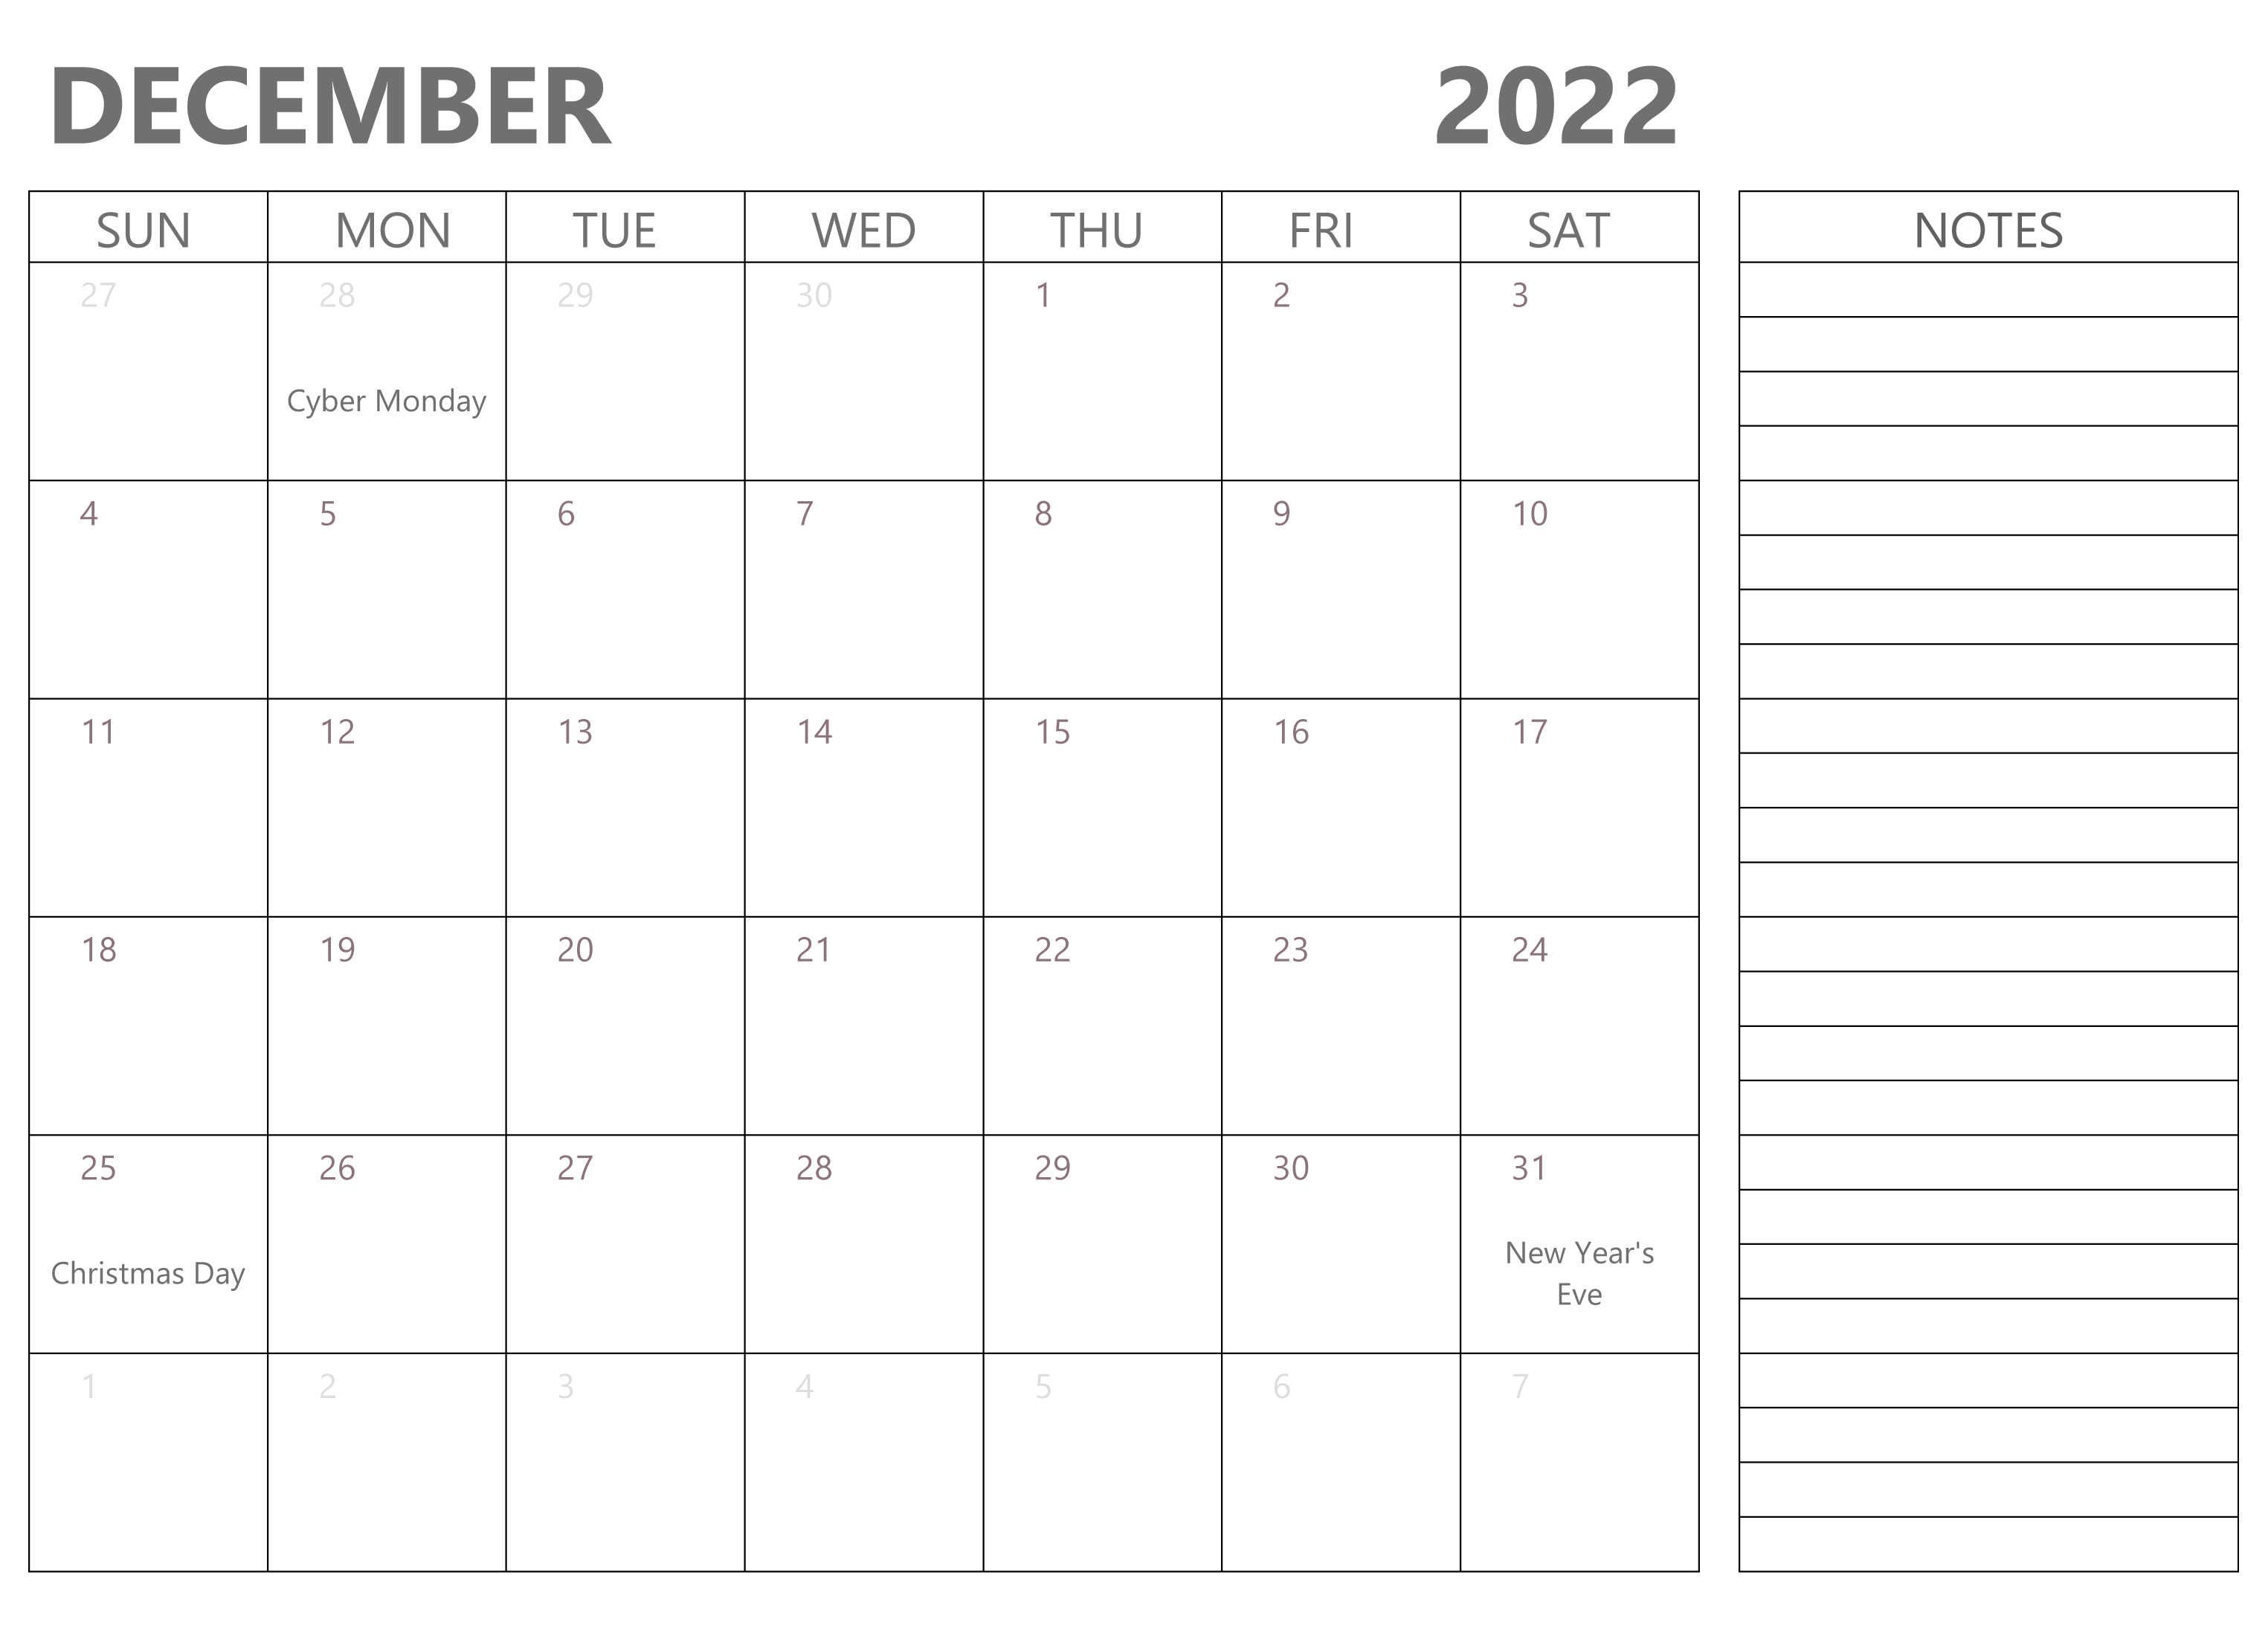 December 2022 Calendar With Holidays Notes